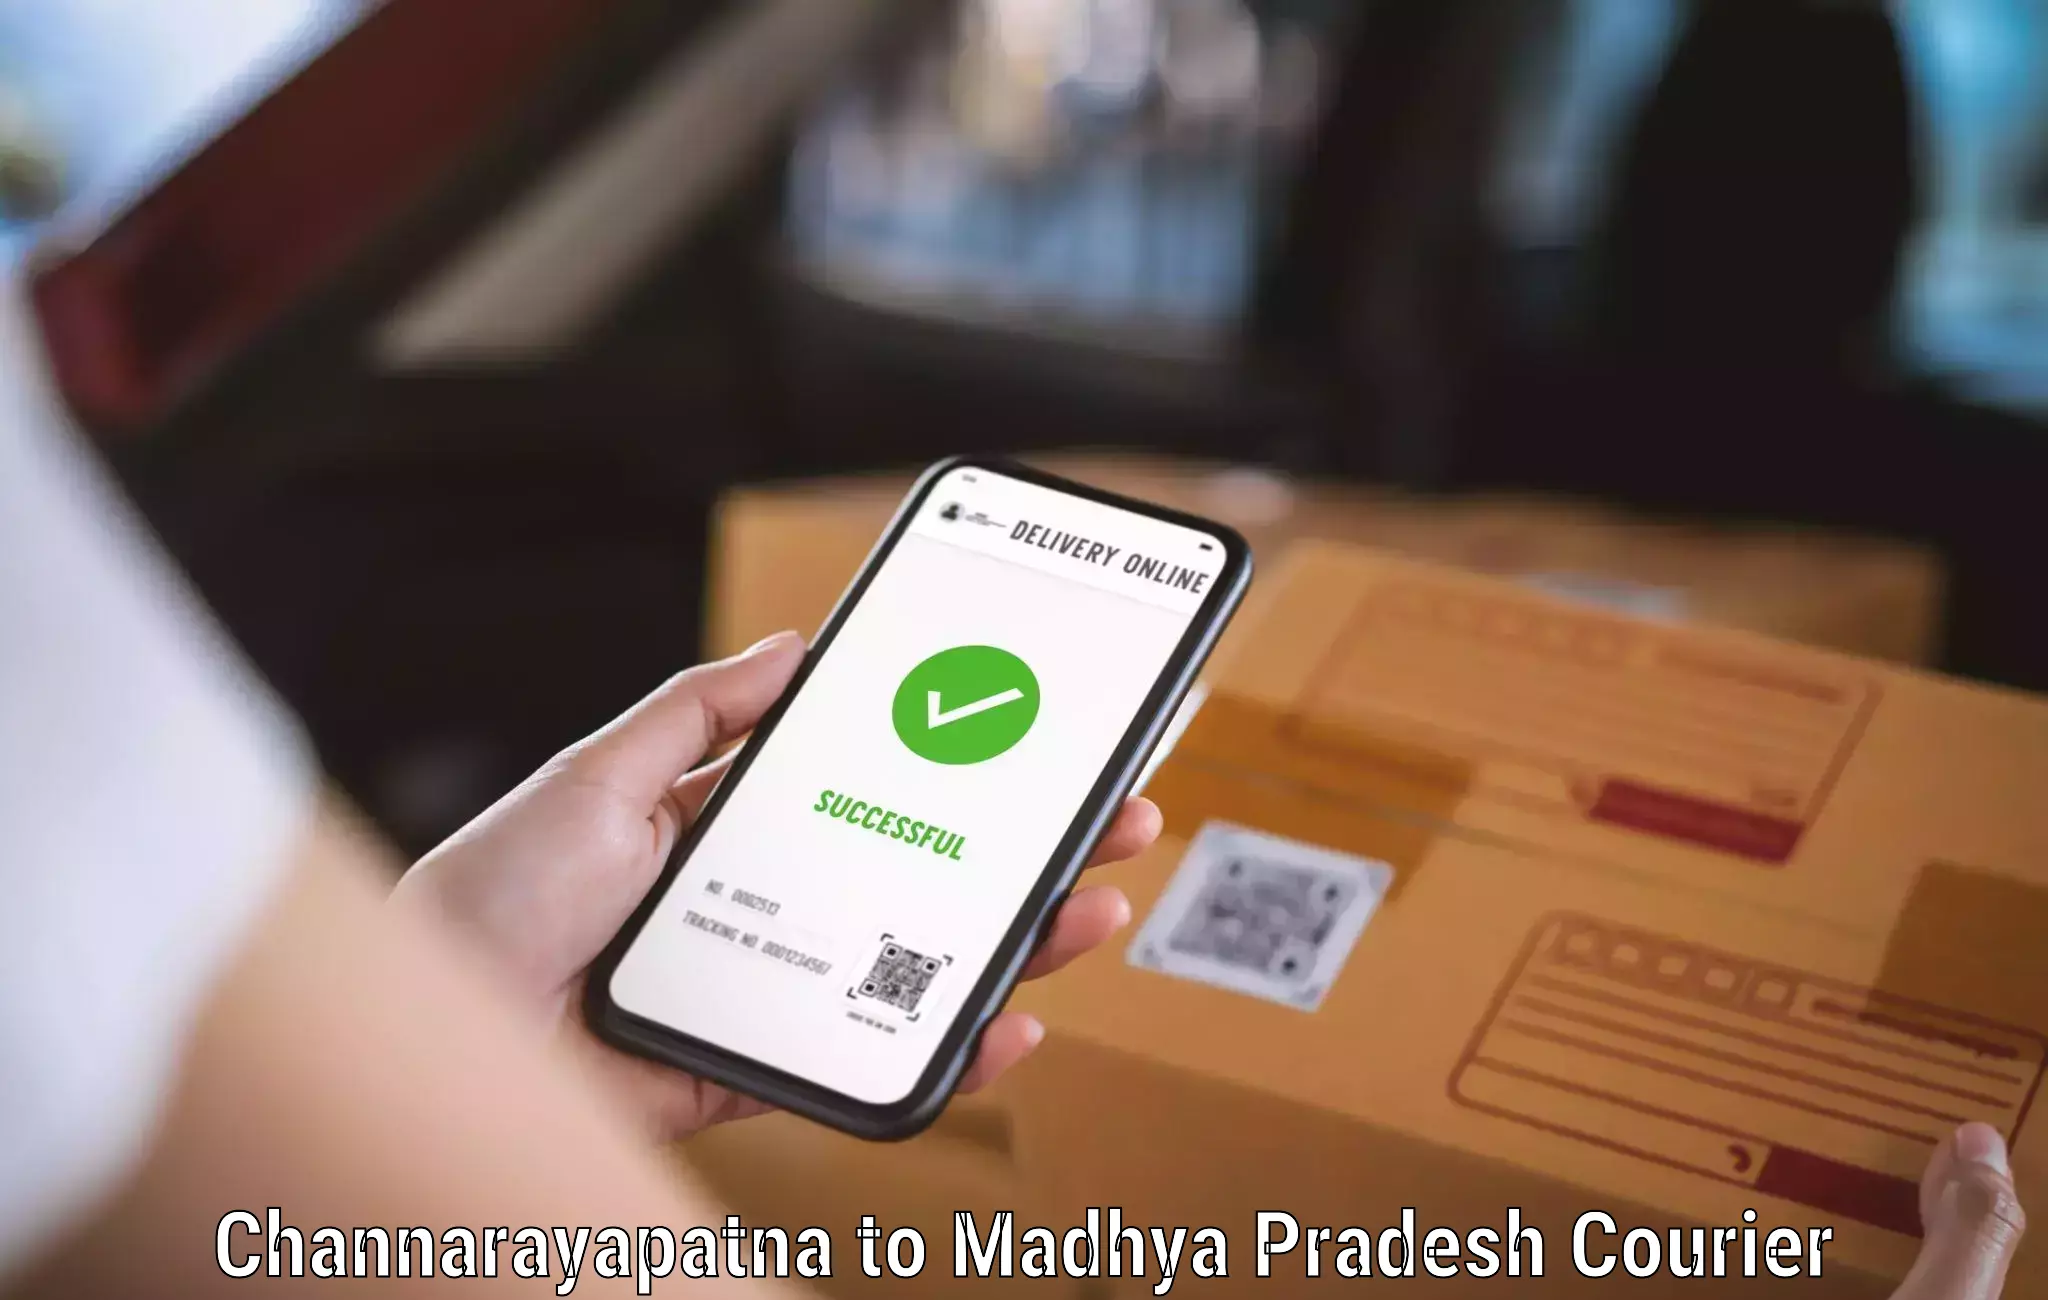 Courier service partnerships Channarayapatna to Nagod